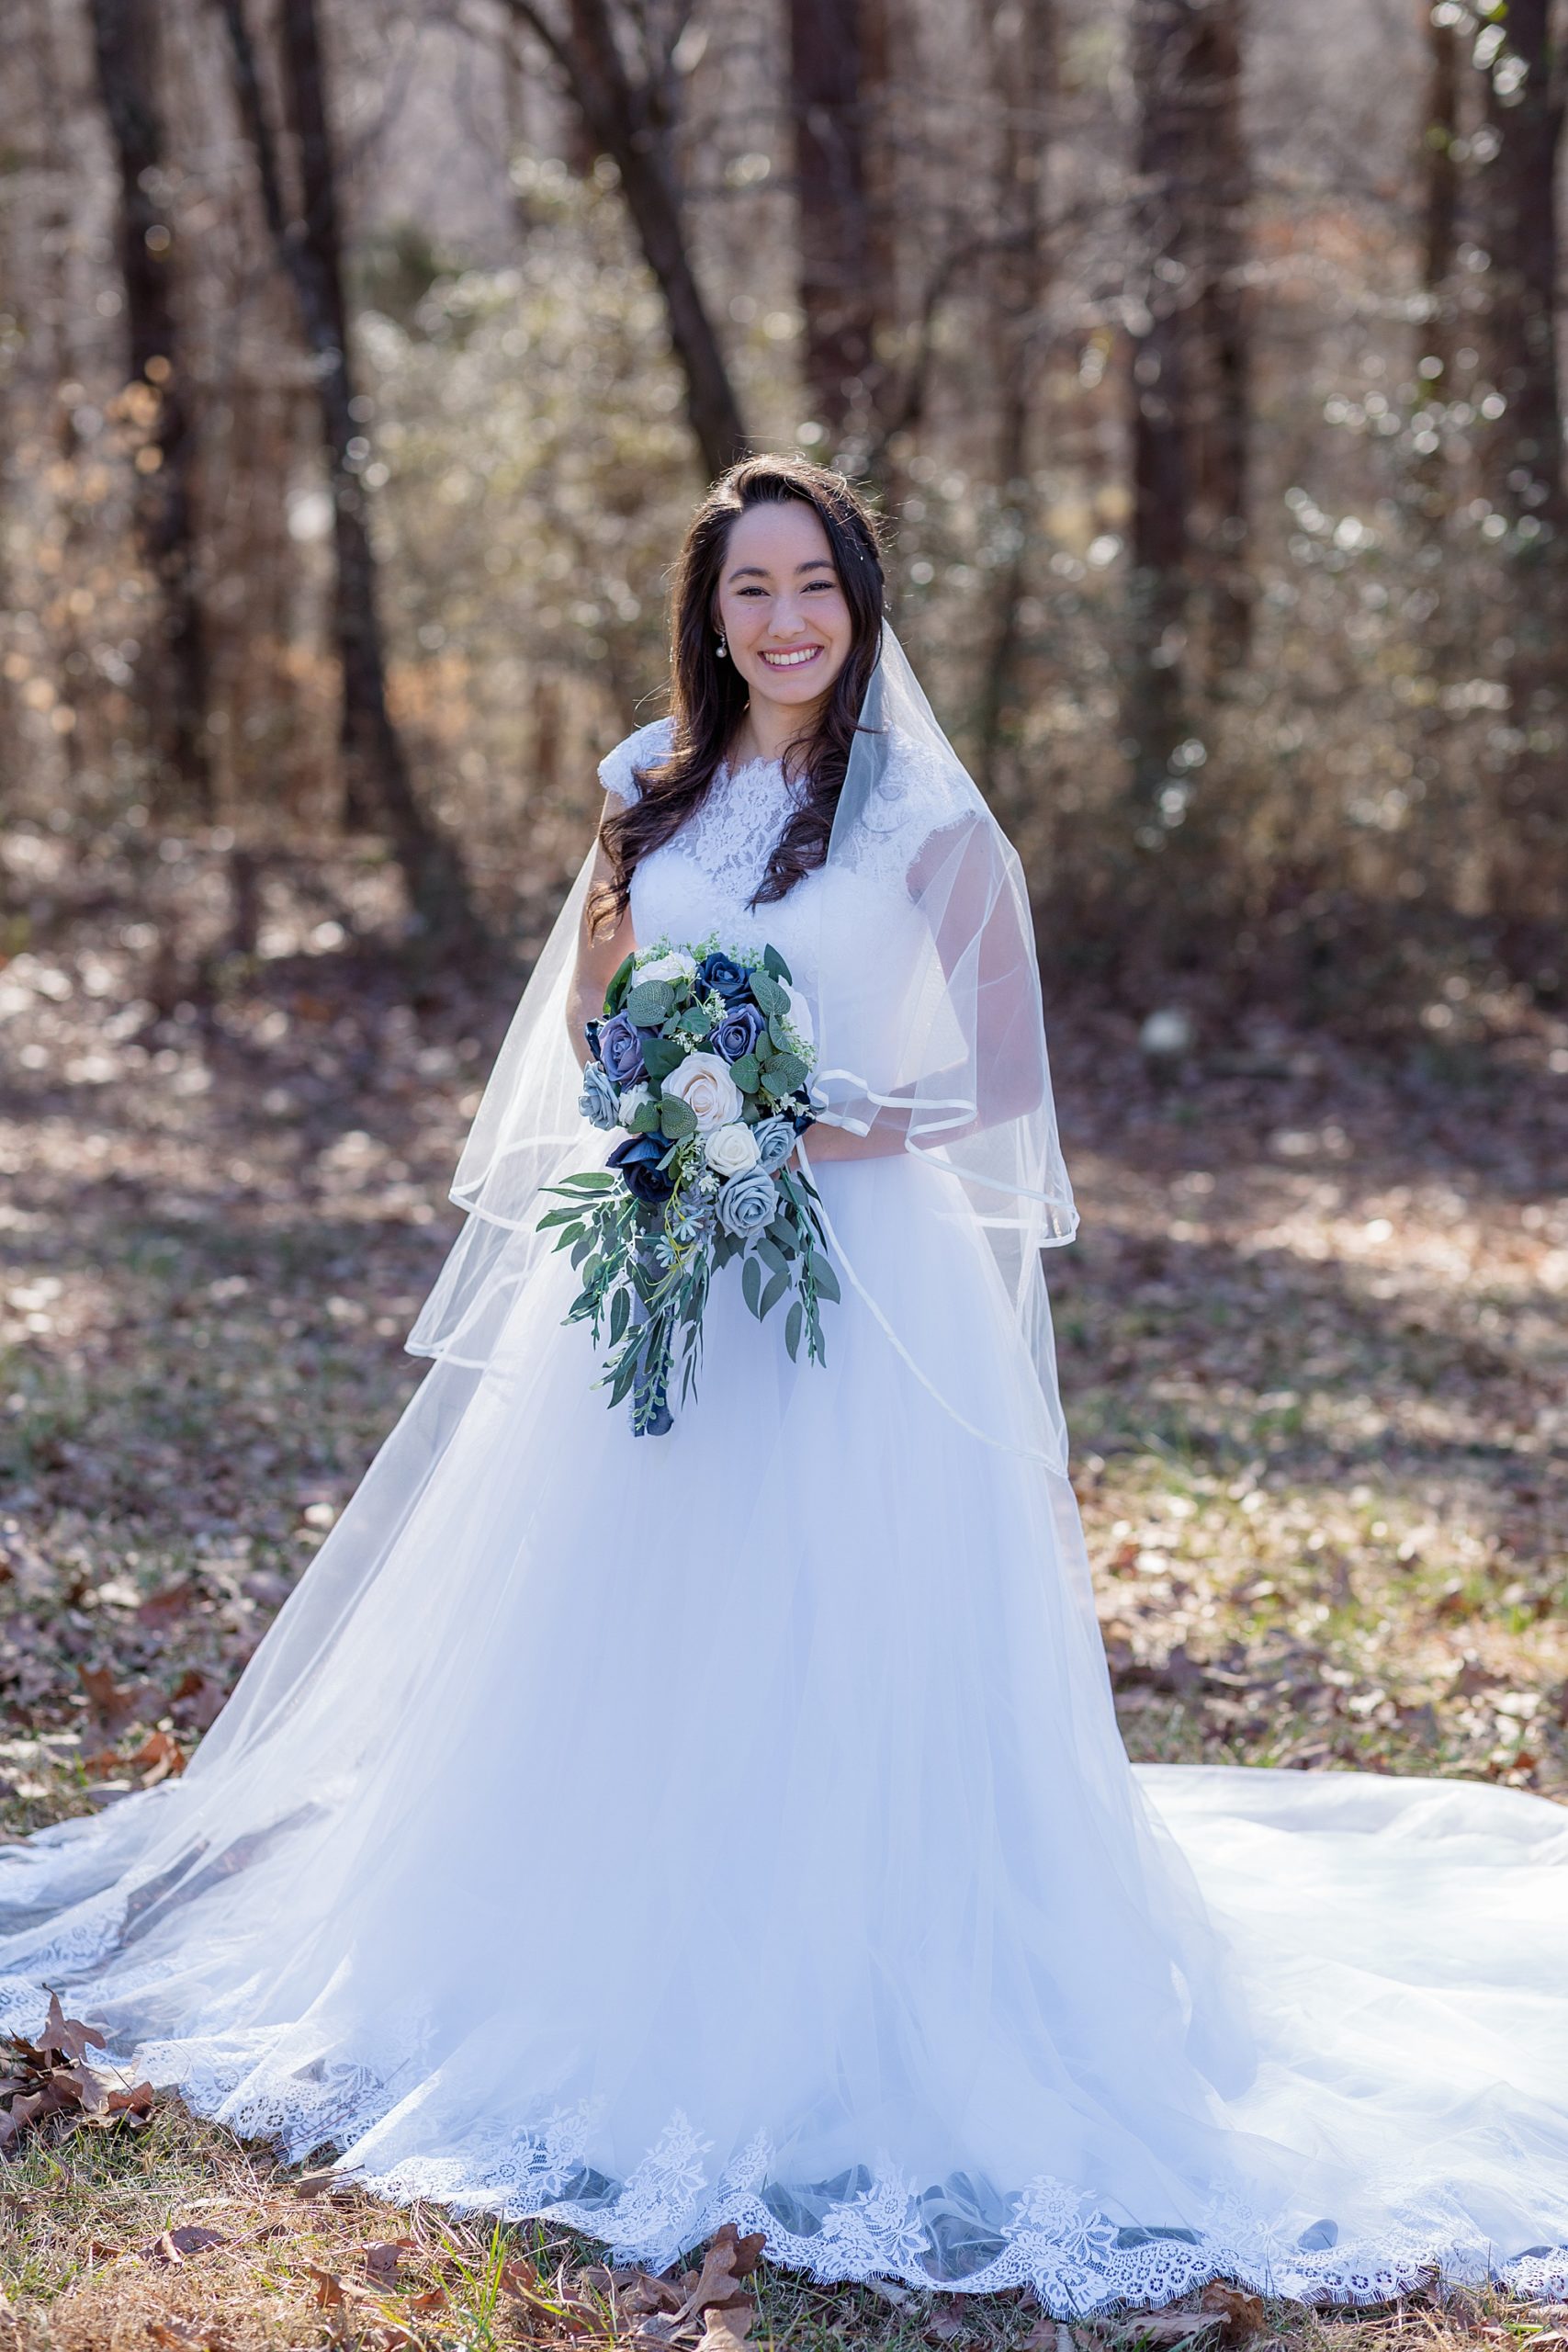  bride stands holding cascading bouquet